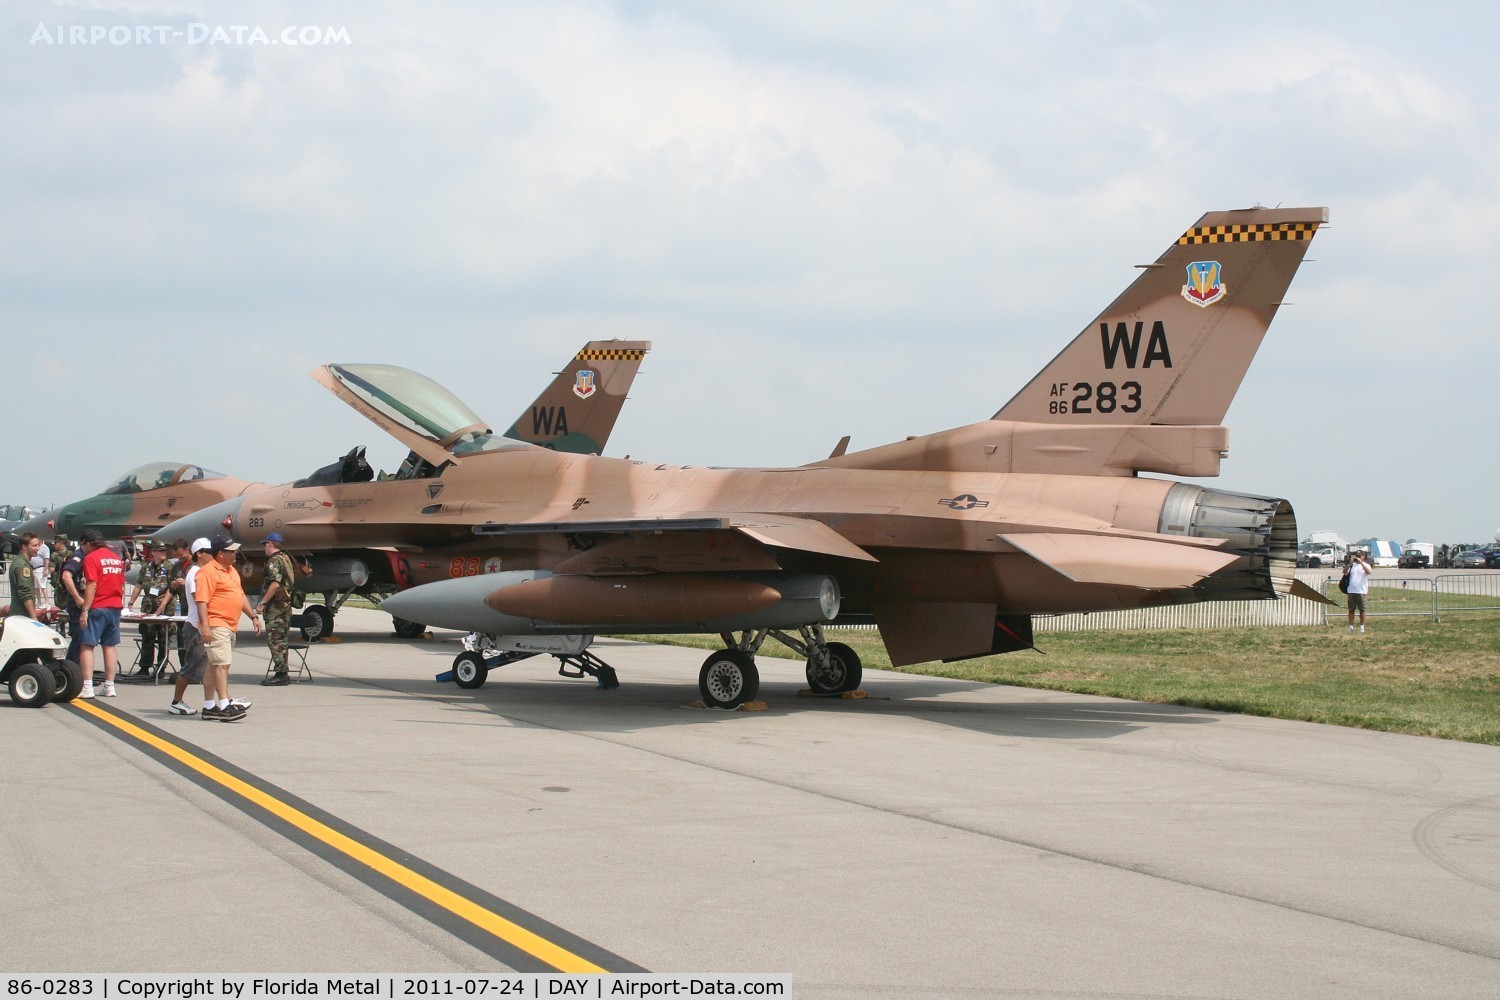 86-0283, 1986 General Dynamics F-16C Fighting Falcon C/N 5C-389, F-16C in aggressor colors